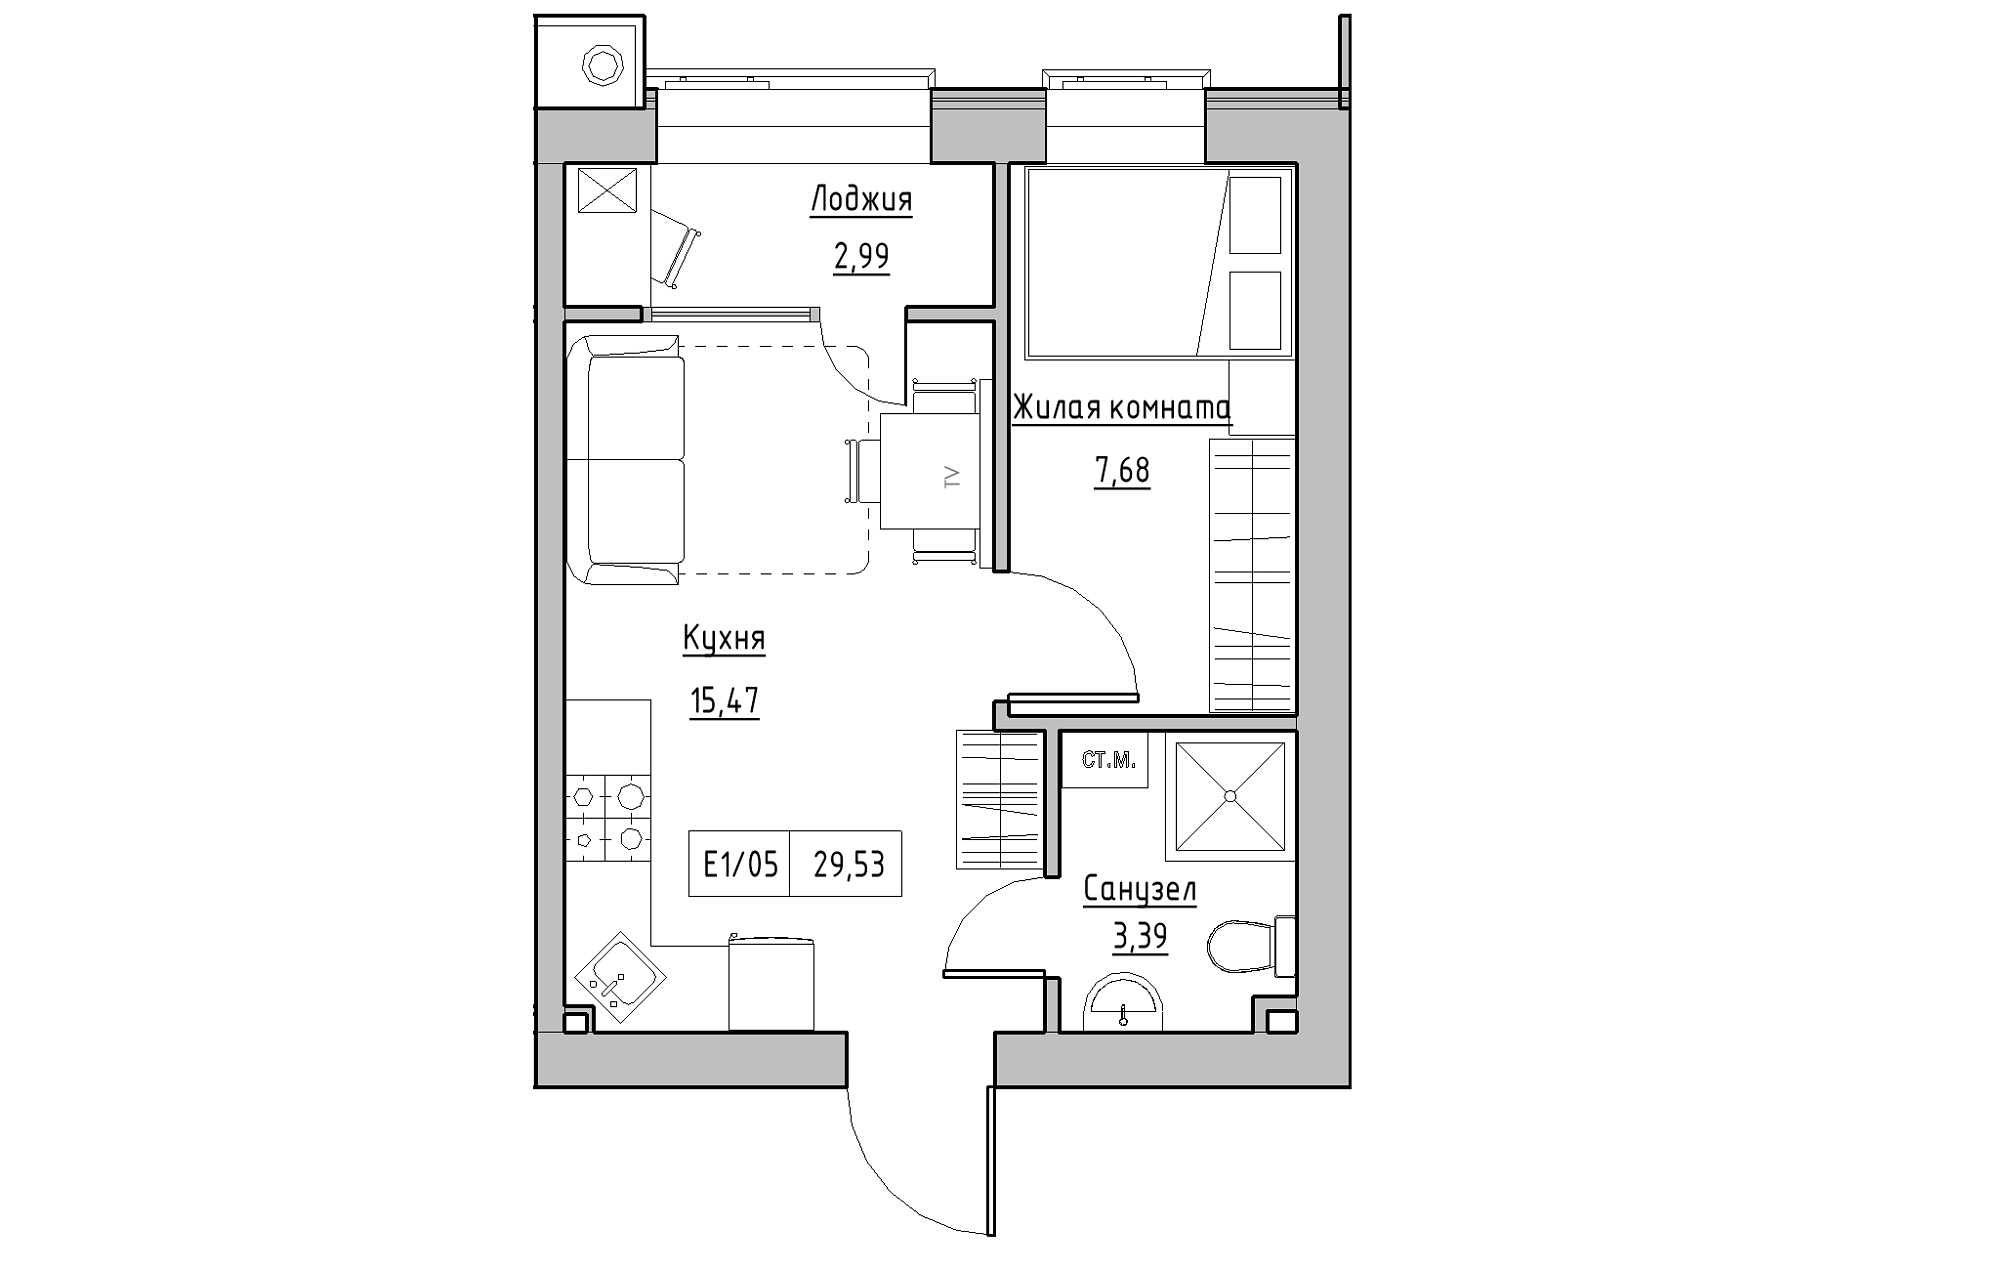 Planning 1-rm flats area 29.53m2, KS-013-03/0008.